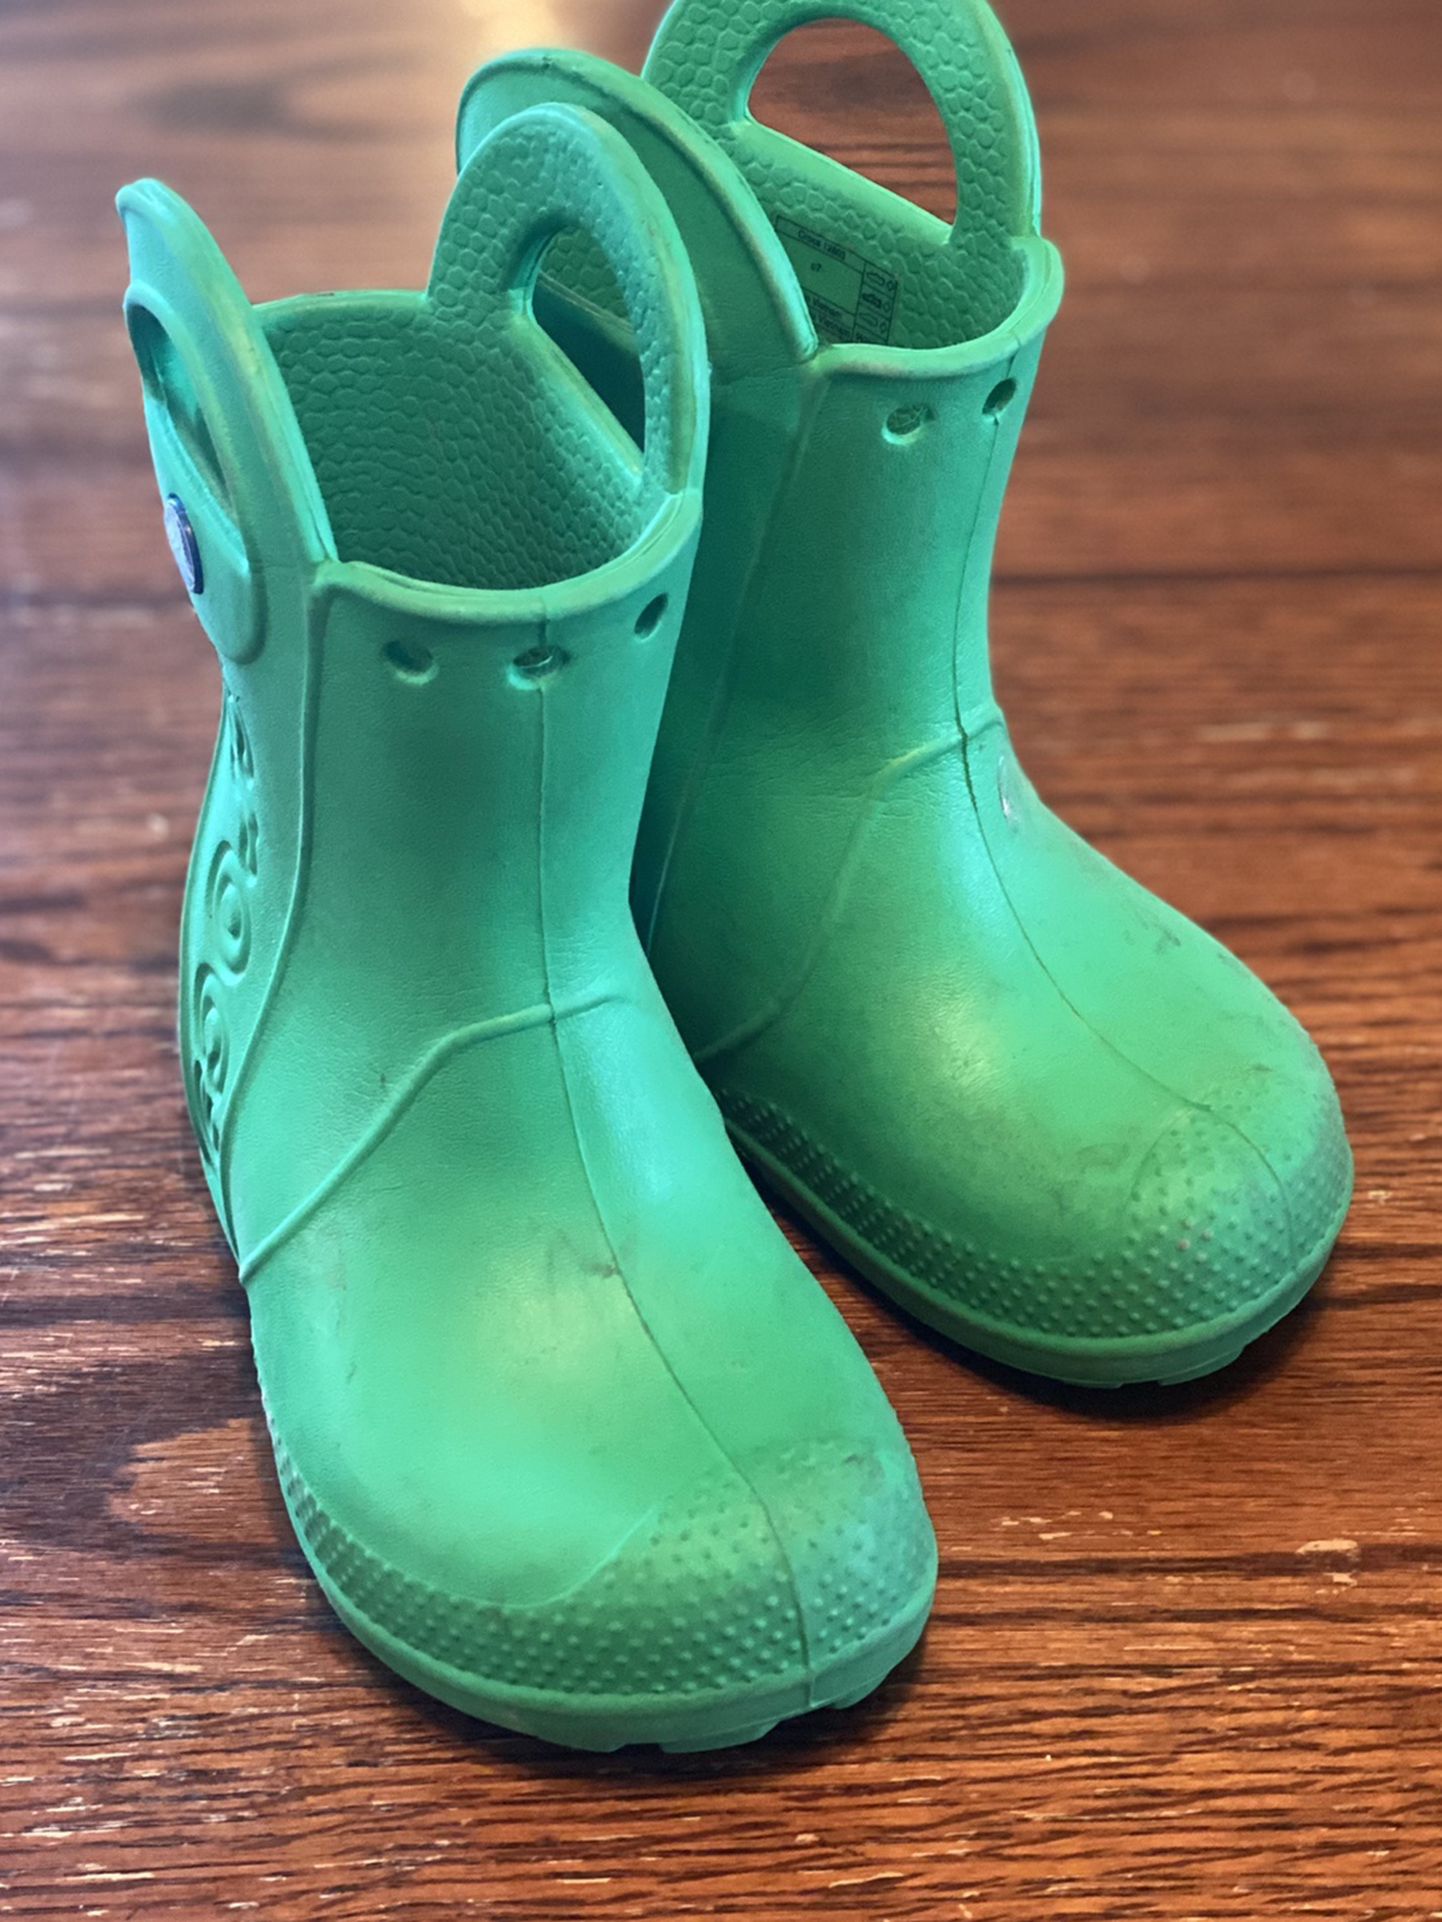 Toddler Rain Boots 7c